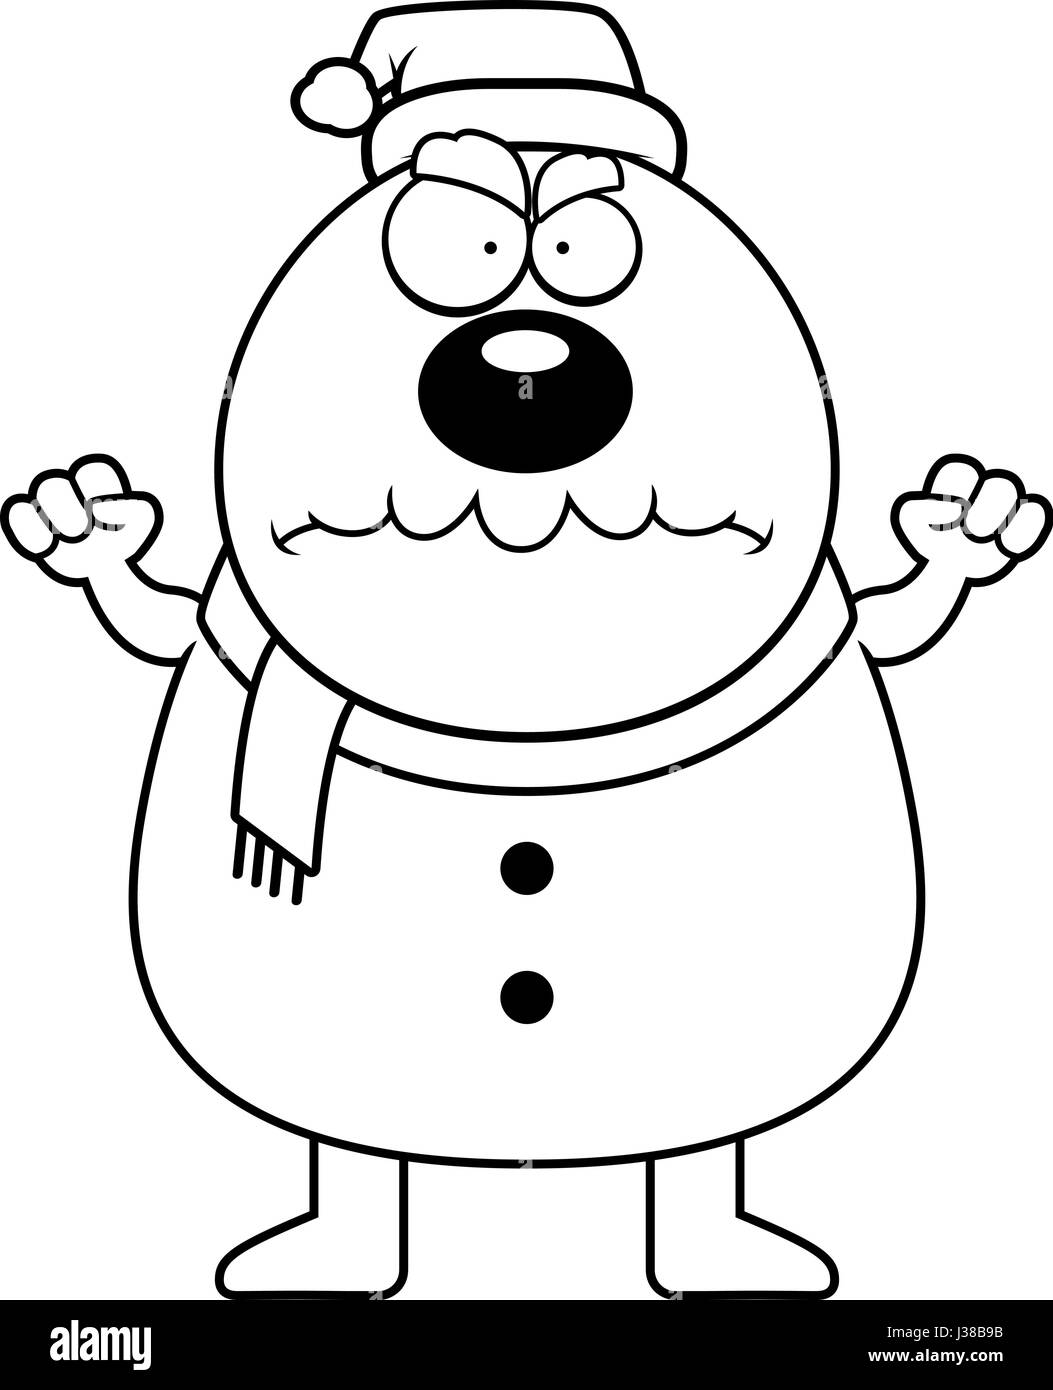 A cartoon illustration of a snowman Santa Claus looking angry. Stock Vector